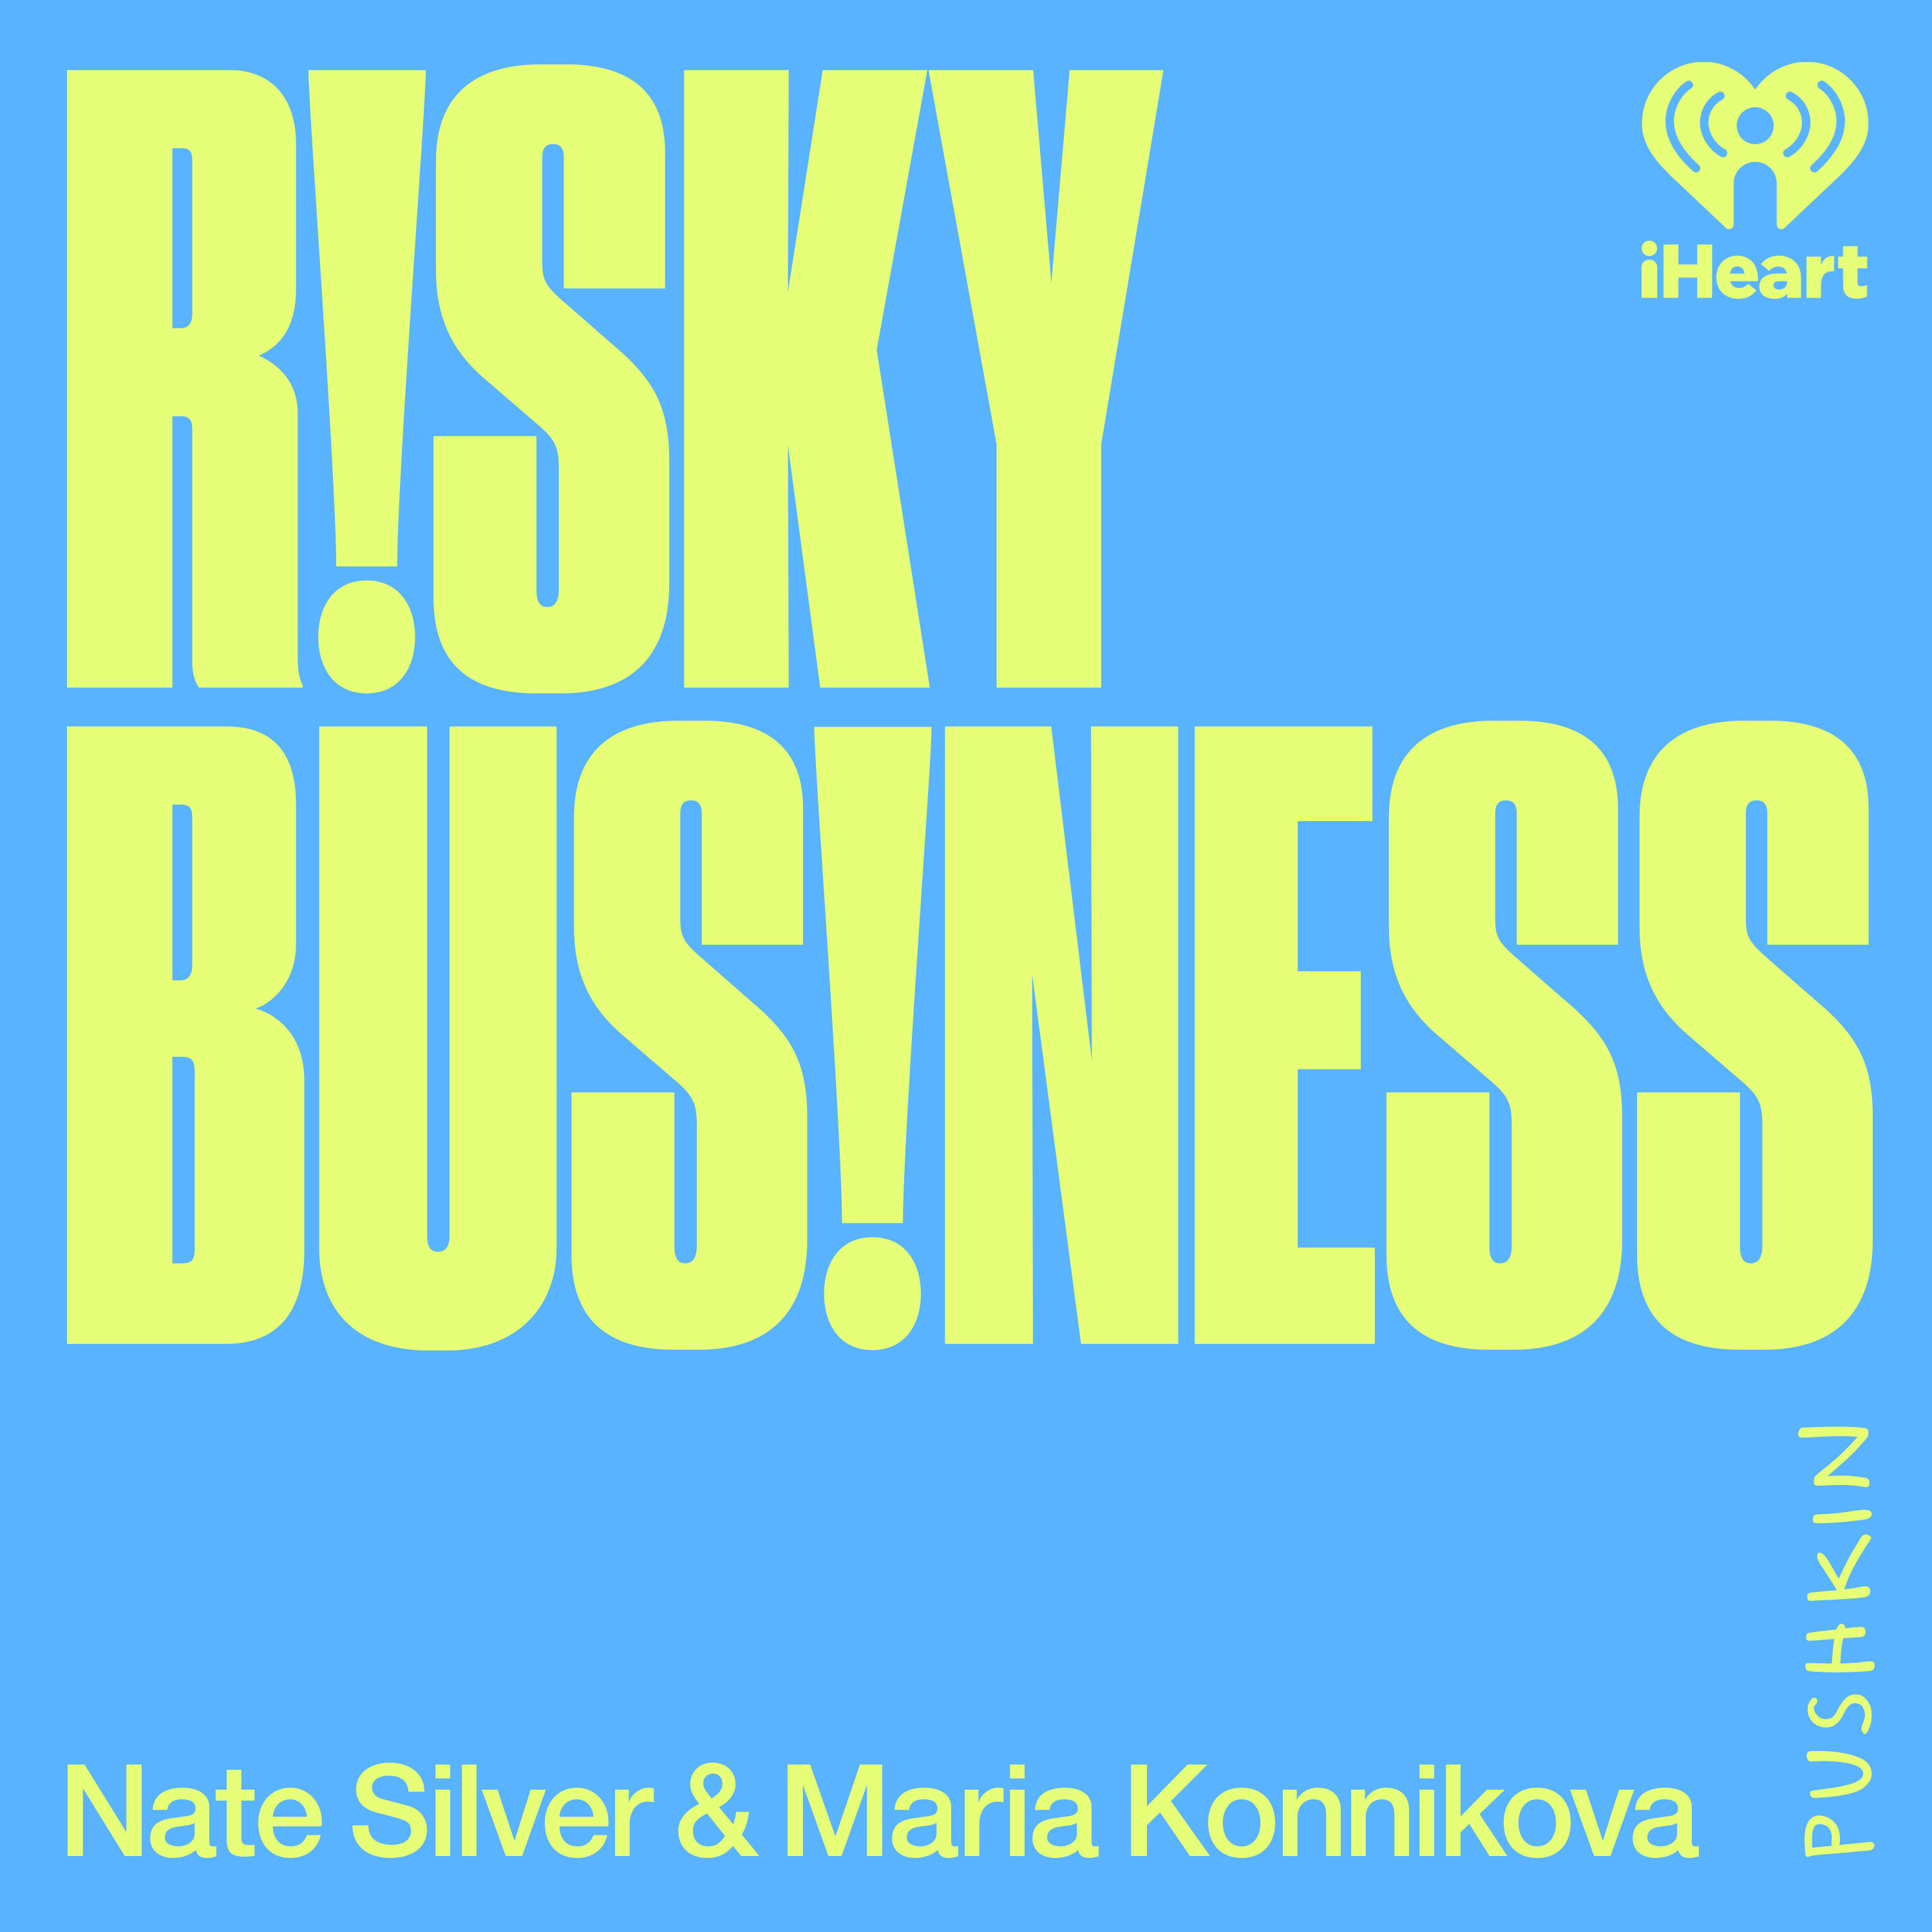 Risky Business with Nate Silver and Maria Konnikova